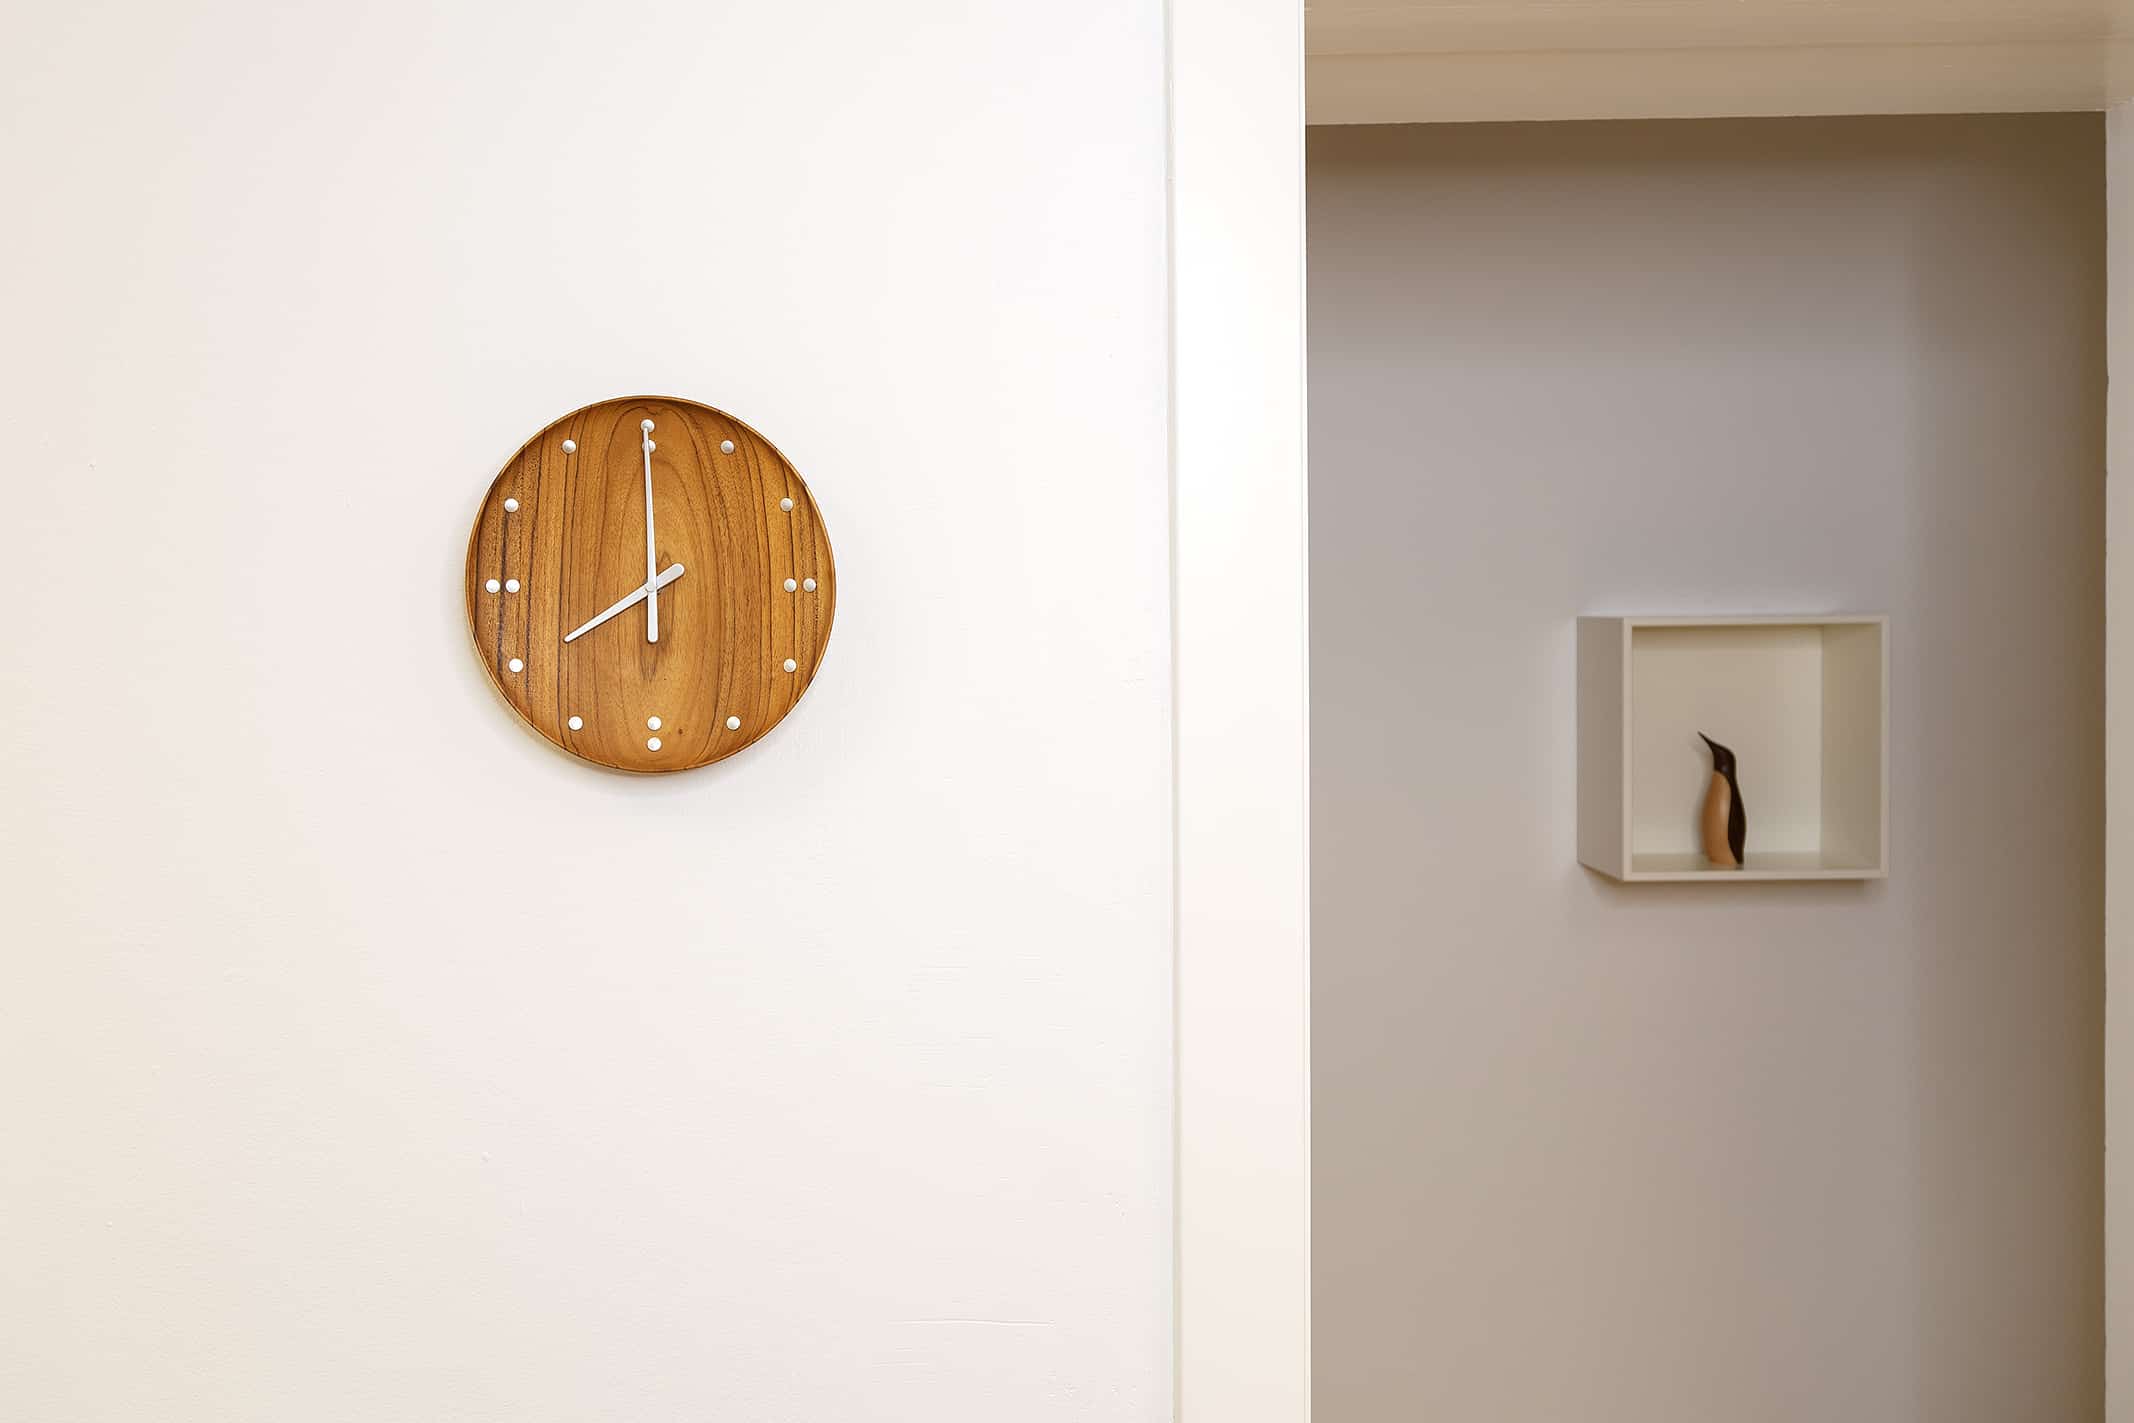 Architectmade Finn Juhl Wall Clock Teak, ø 35 Cm